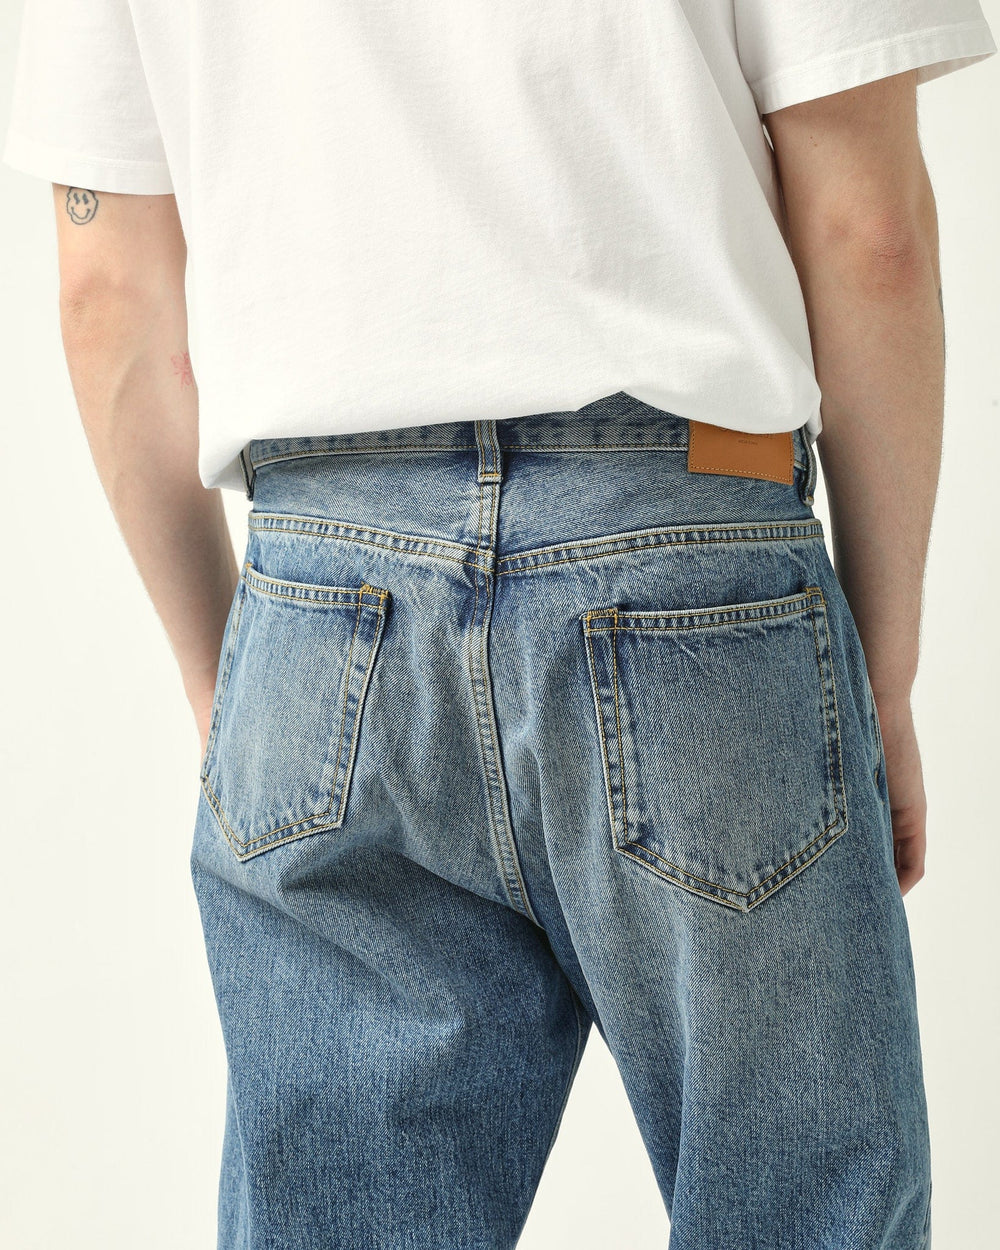 Organic Italian - 5 Pocket Jean - Washed-Jeans-Corridor-Corridor